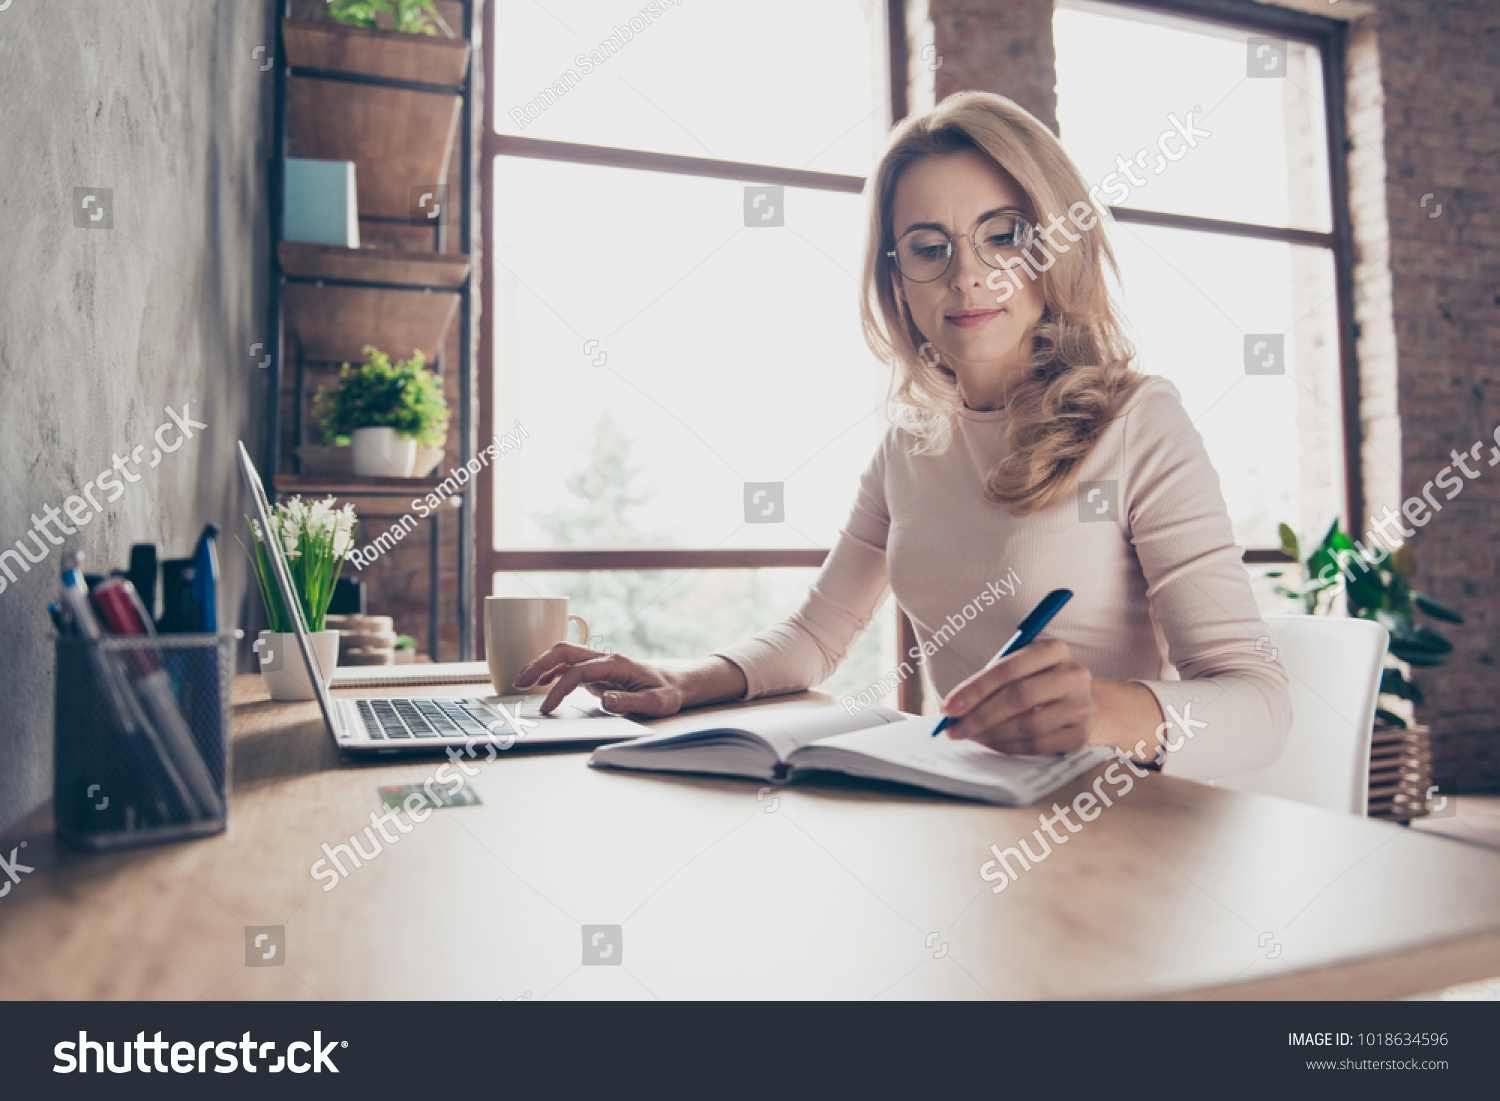 Planning woman Images, Stock Photos & Vectors | Shutterstock